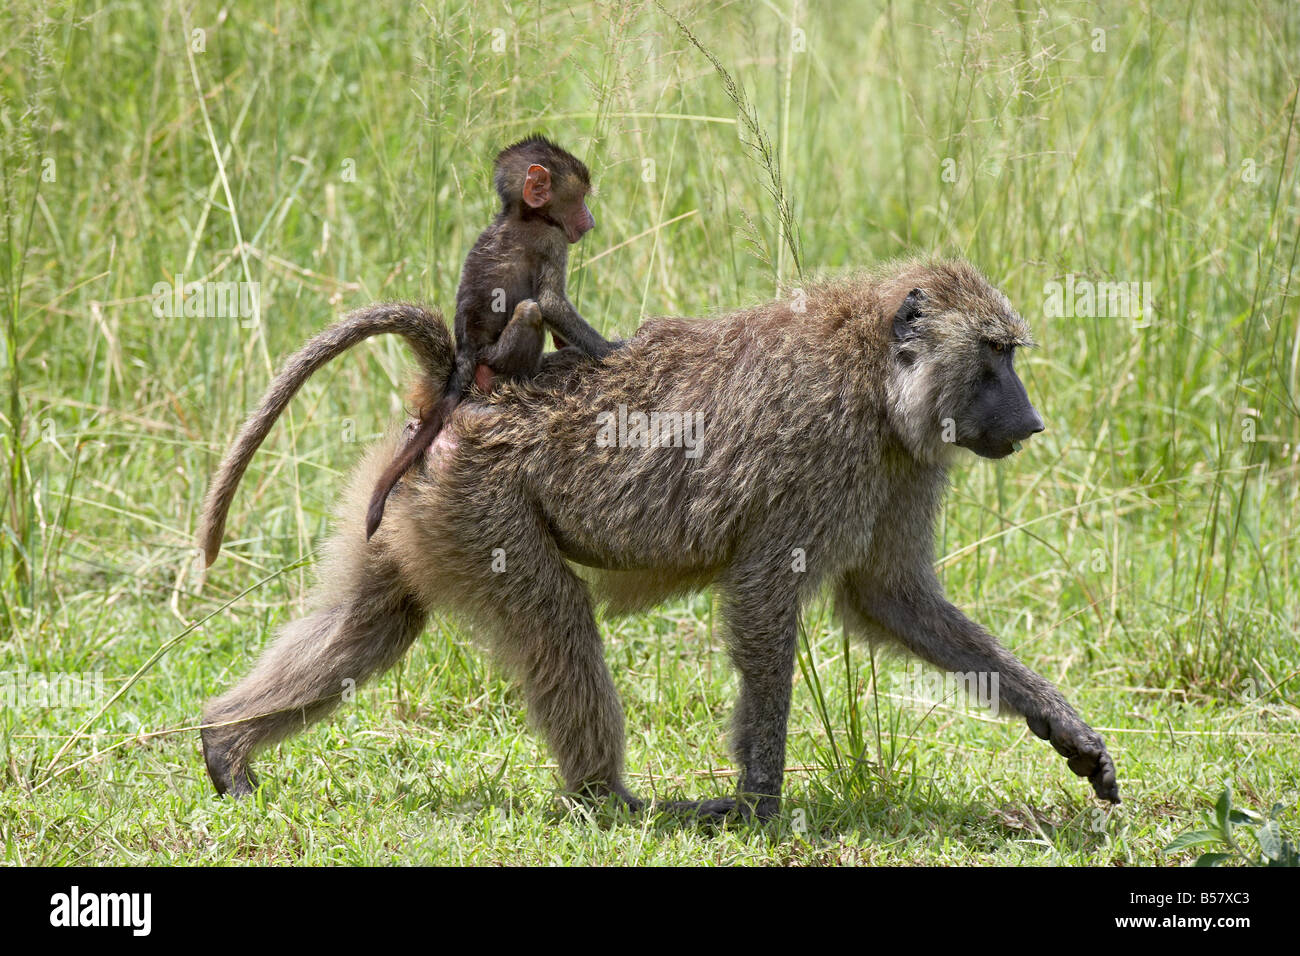 Olive baboon (Papio cynocephalus anubis) infant riding on its mother's back, Serengeti National Park, Tanzania Stock Photo